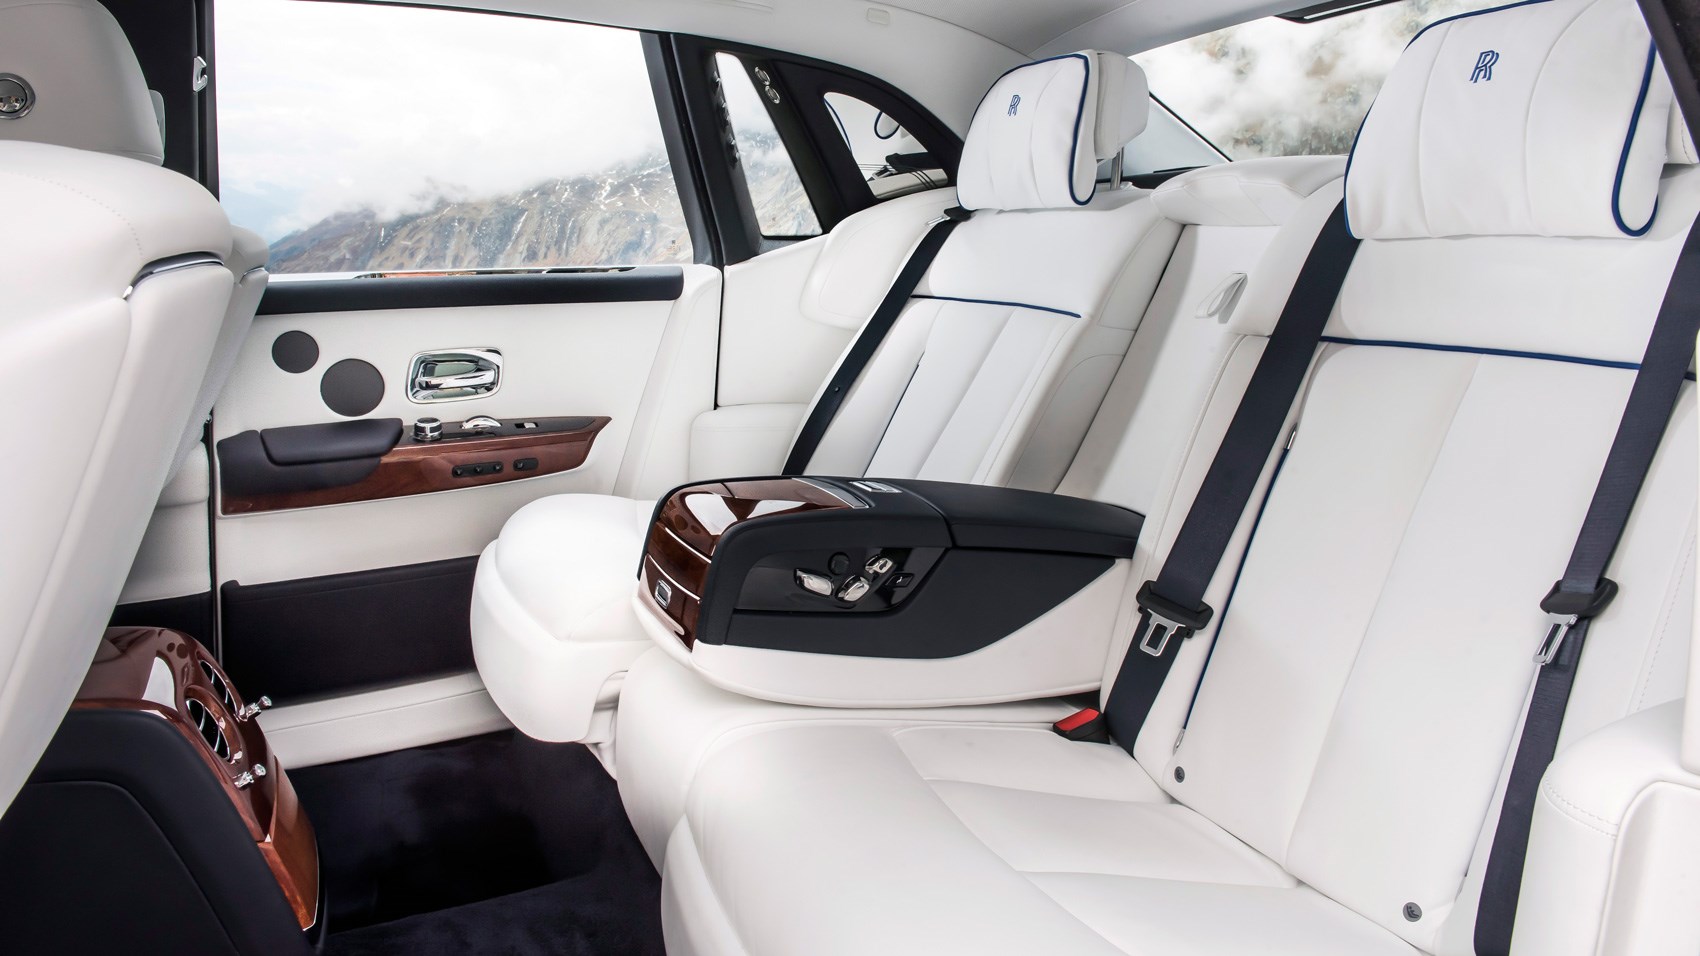 Rolls-Royce Phantom rear seats